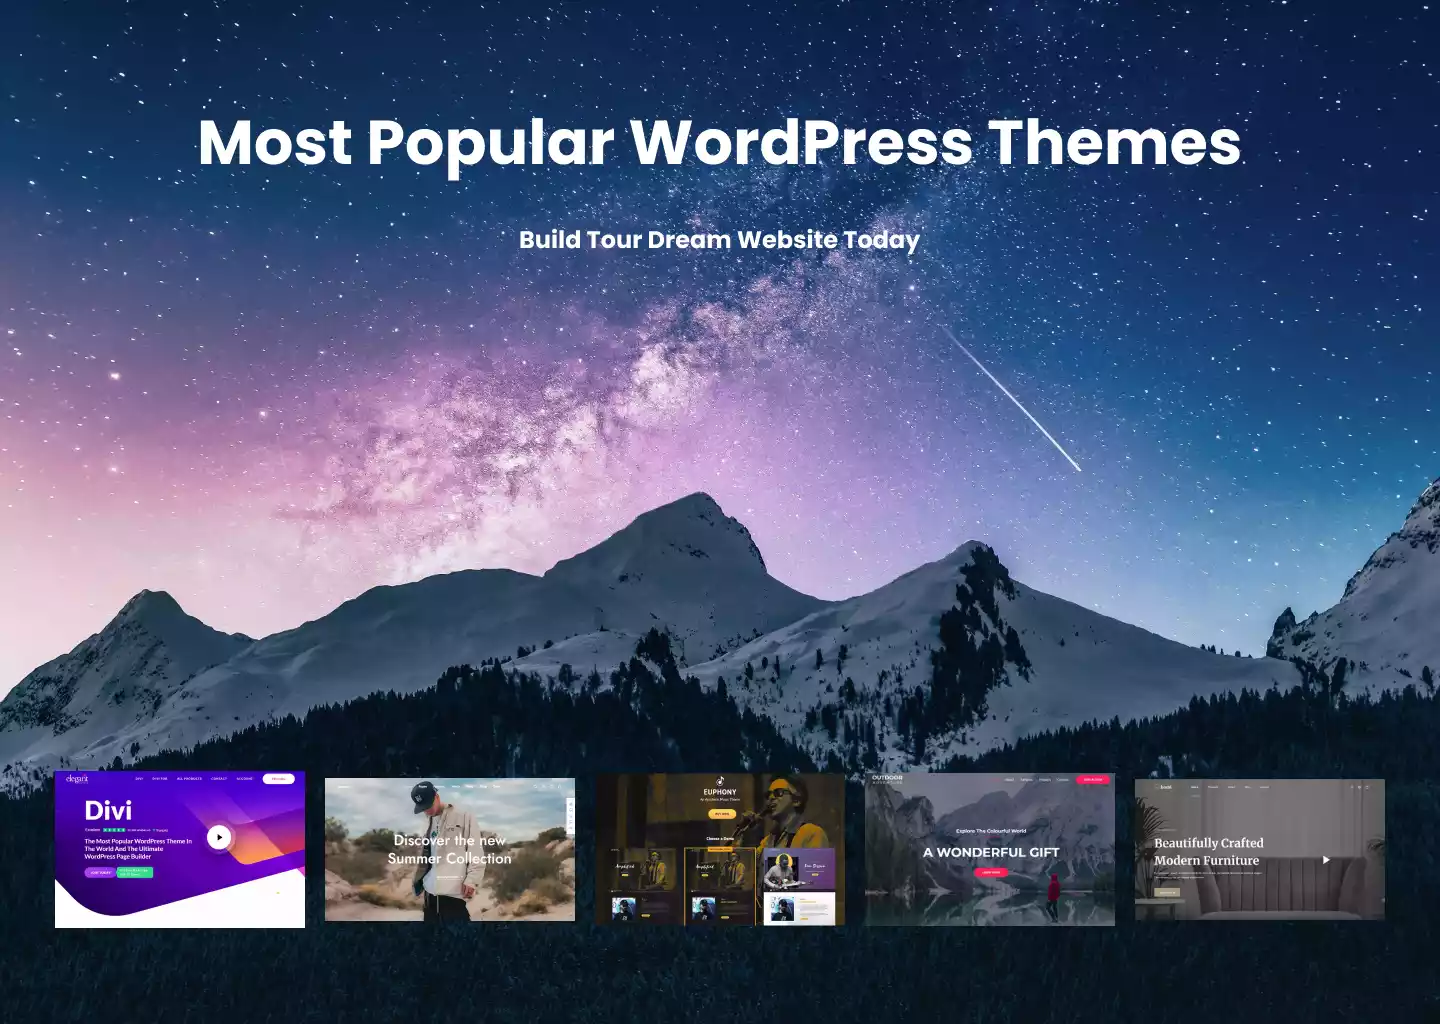 Best WordPress themes